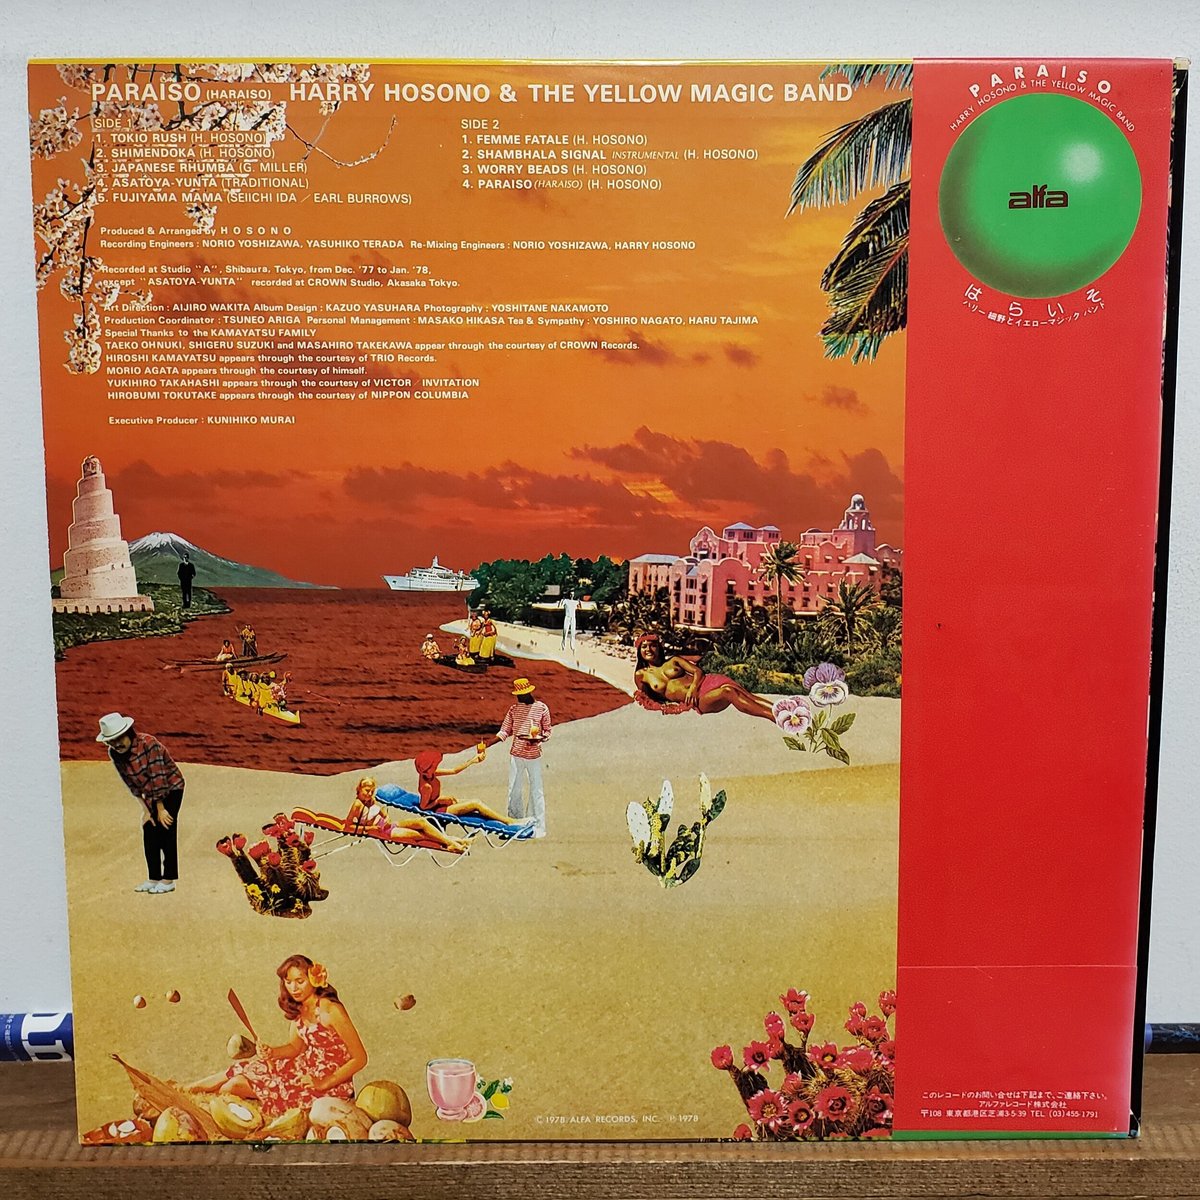 《LP》HARRY HOSONO & THE YELLOW MAGIC BAND/はらいそ PARAISO ALR-6003 初回盤・ OBI NM  / NM 美レコード盤